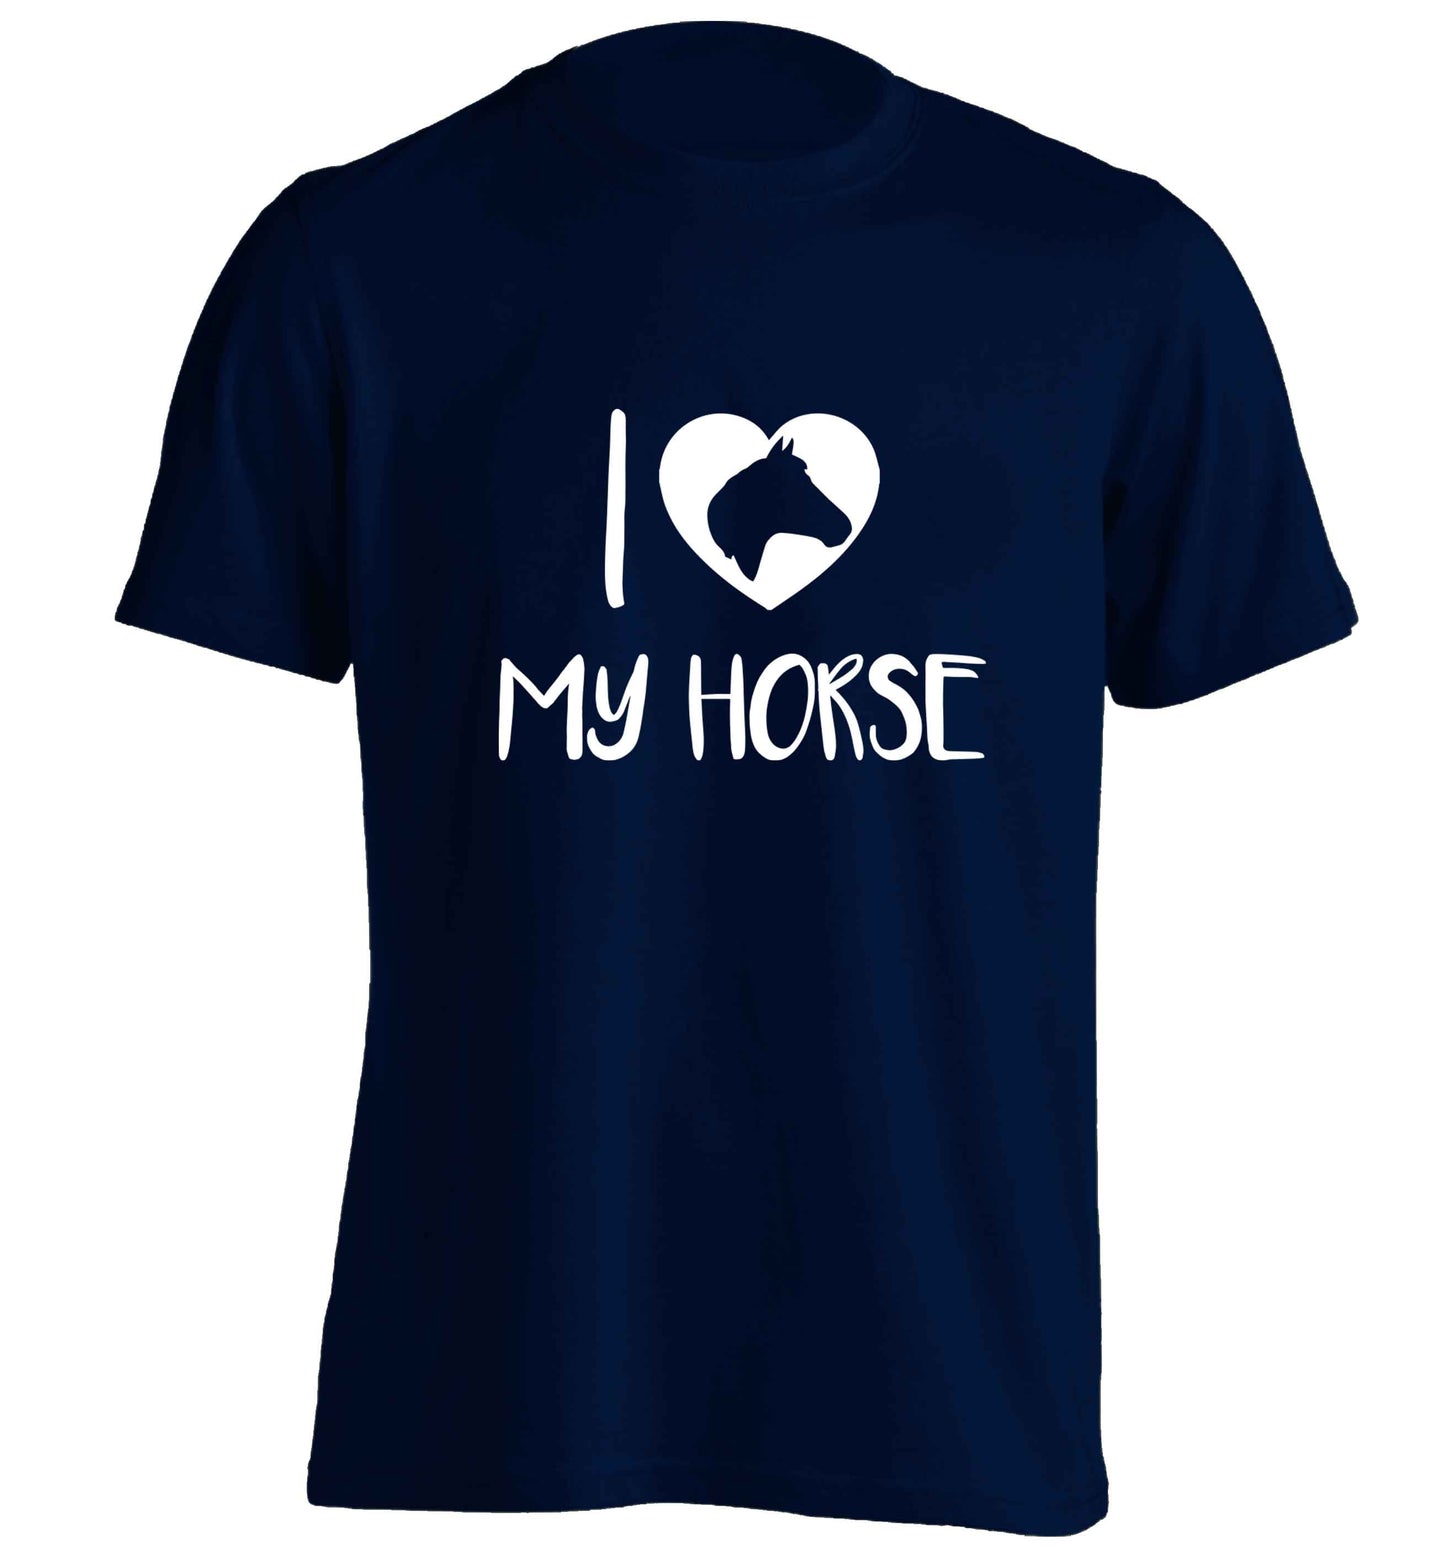 I love my horse adults unisex navy Tshirt 2XL